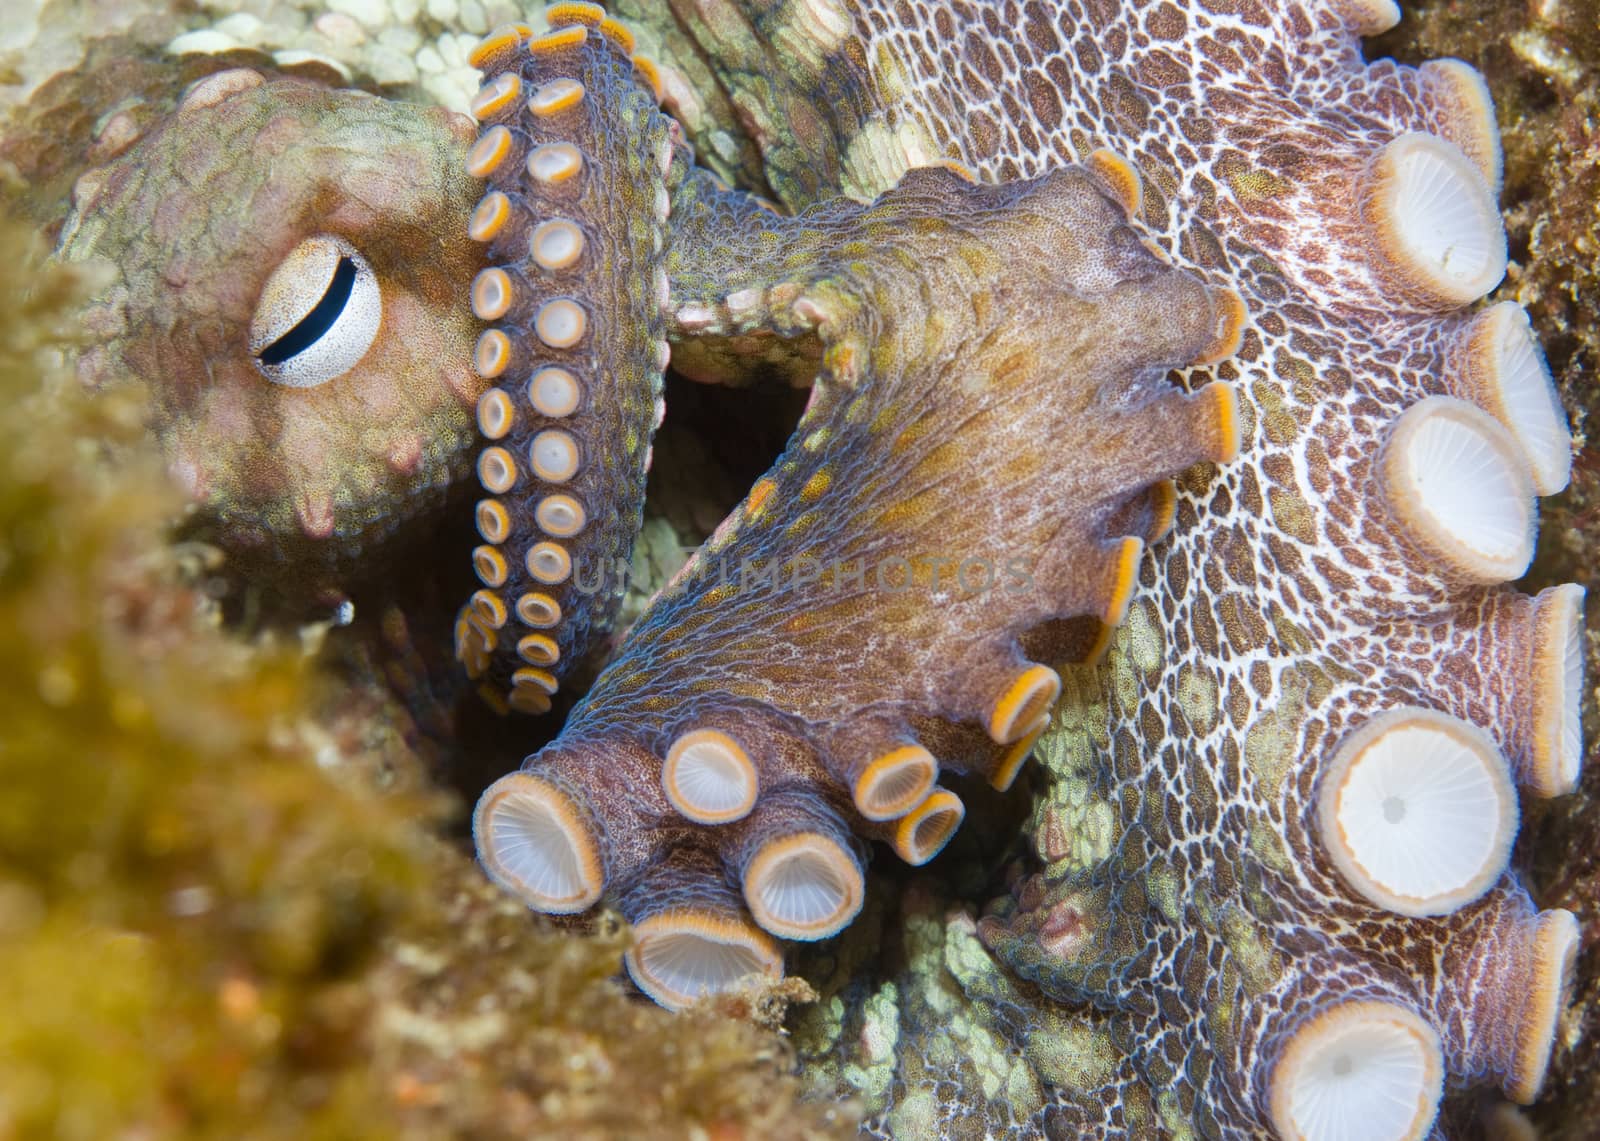 Octopus by Njean